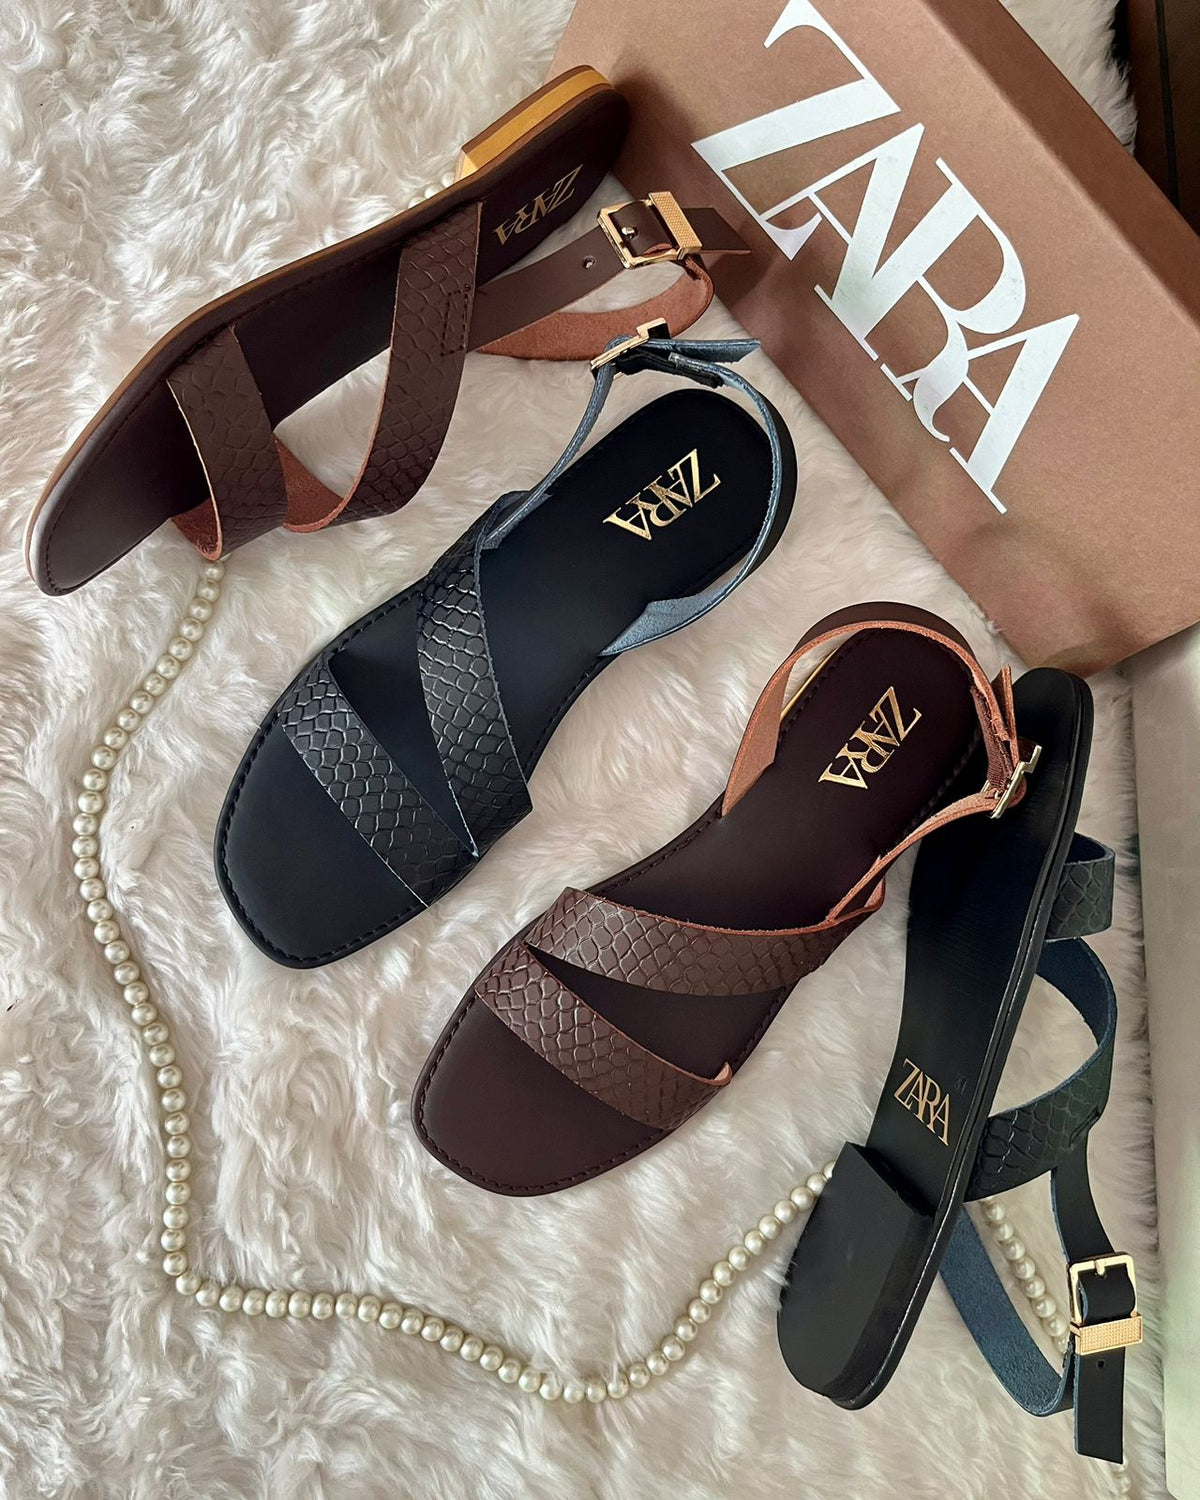 Zara Footwear - #ZARA slippers | Facebook